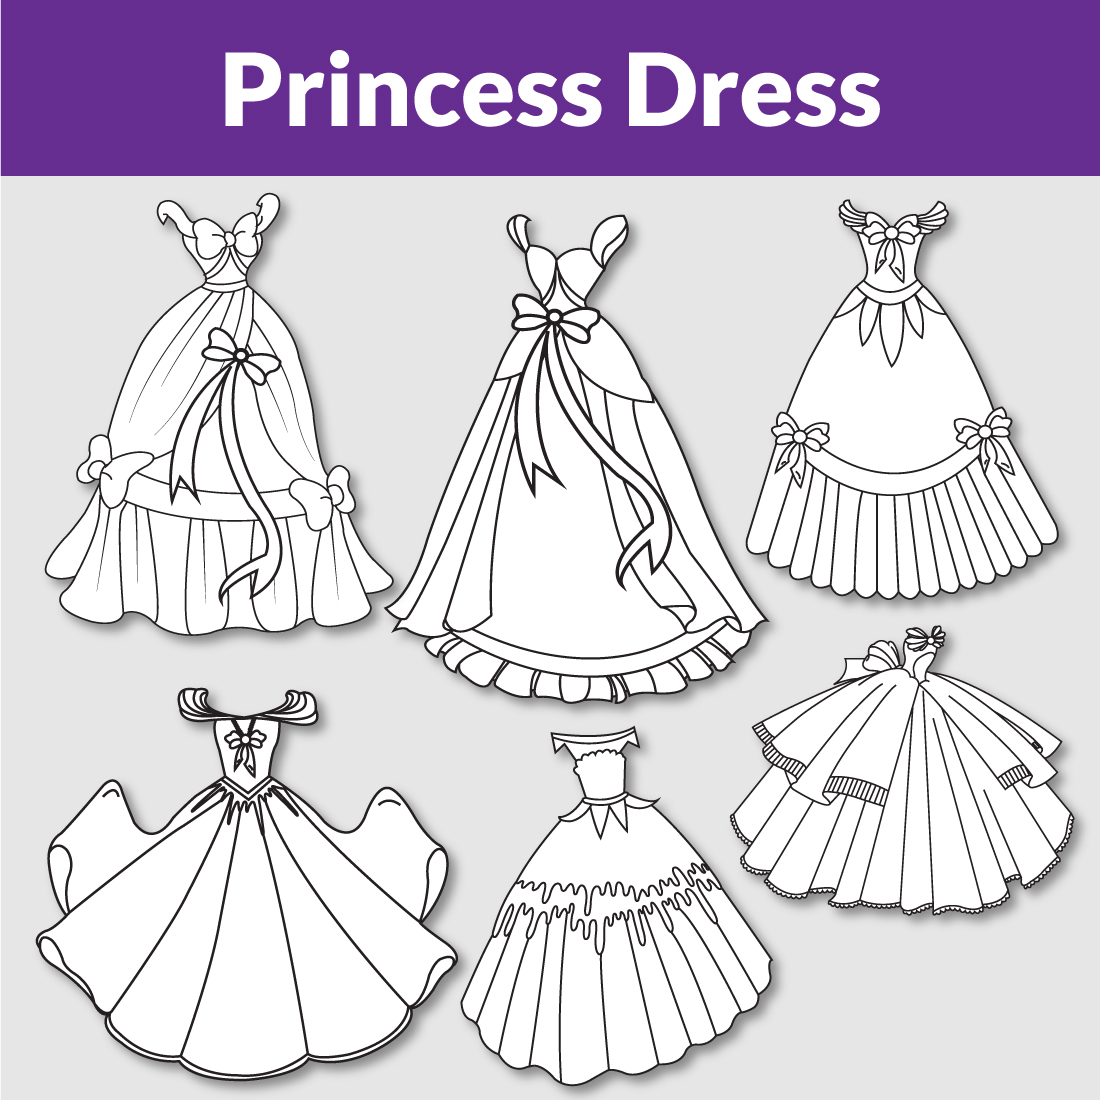 Princess dress maker